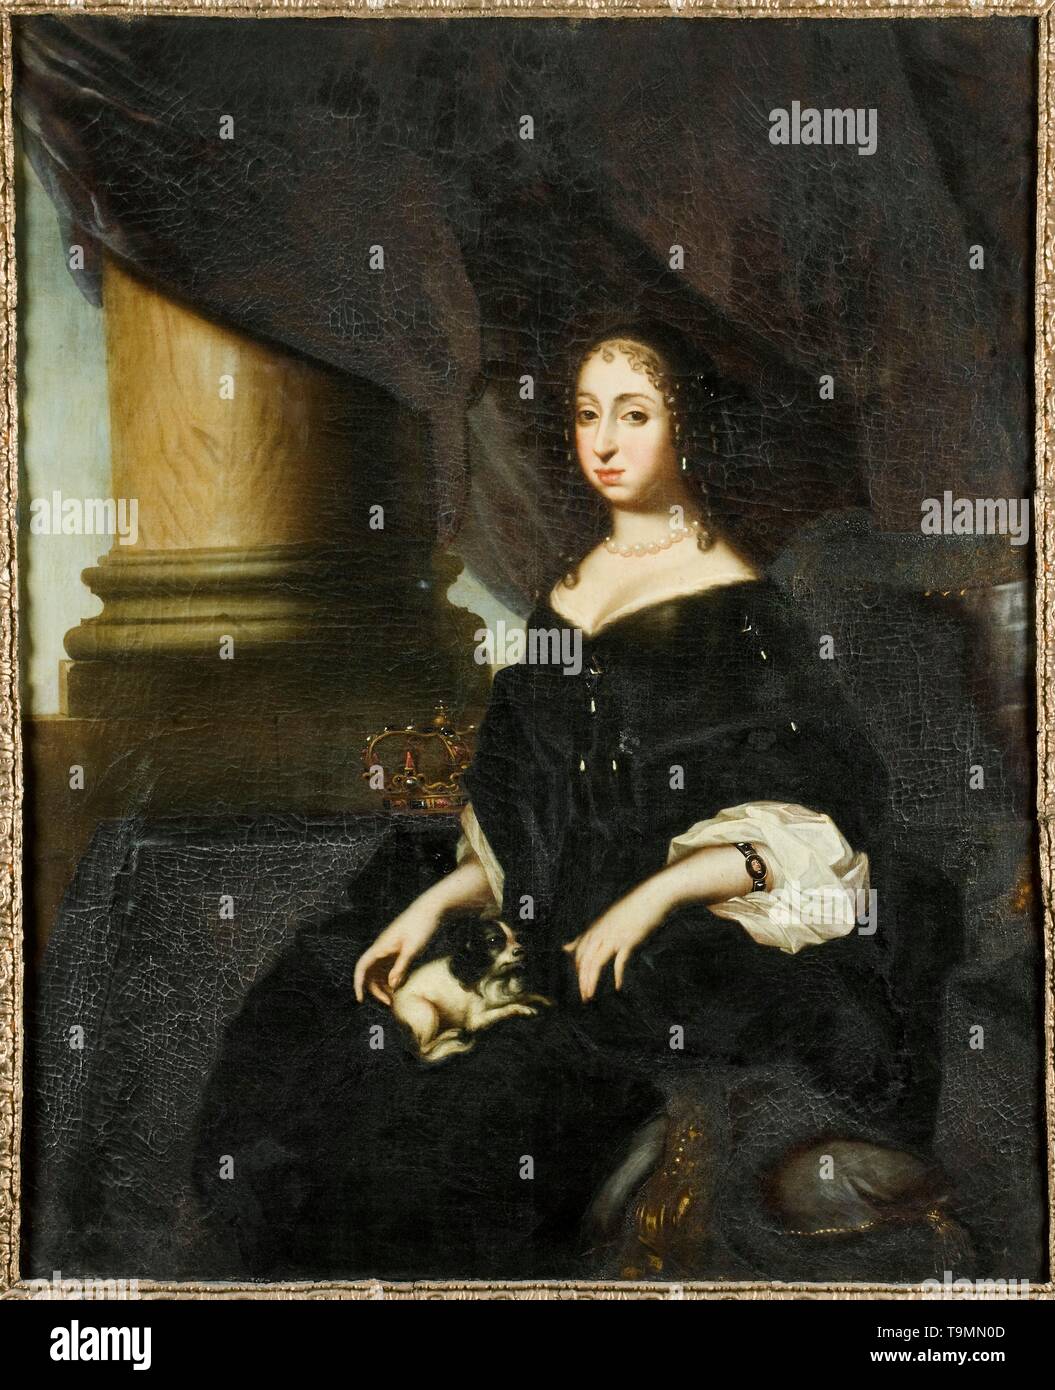 Portrait of Hedvig Eleonora of Holstein-Gottorp (1636-1715), Queen of Sweden. Museum: Skokloster Castle. Author: David Klöcker Ehrenstrahl. Stock Photo